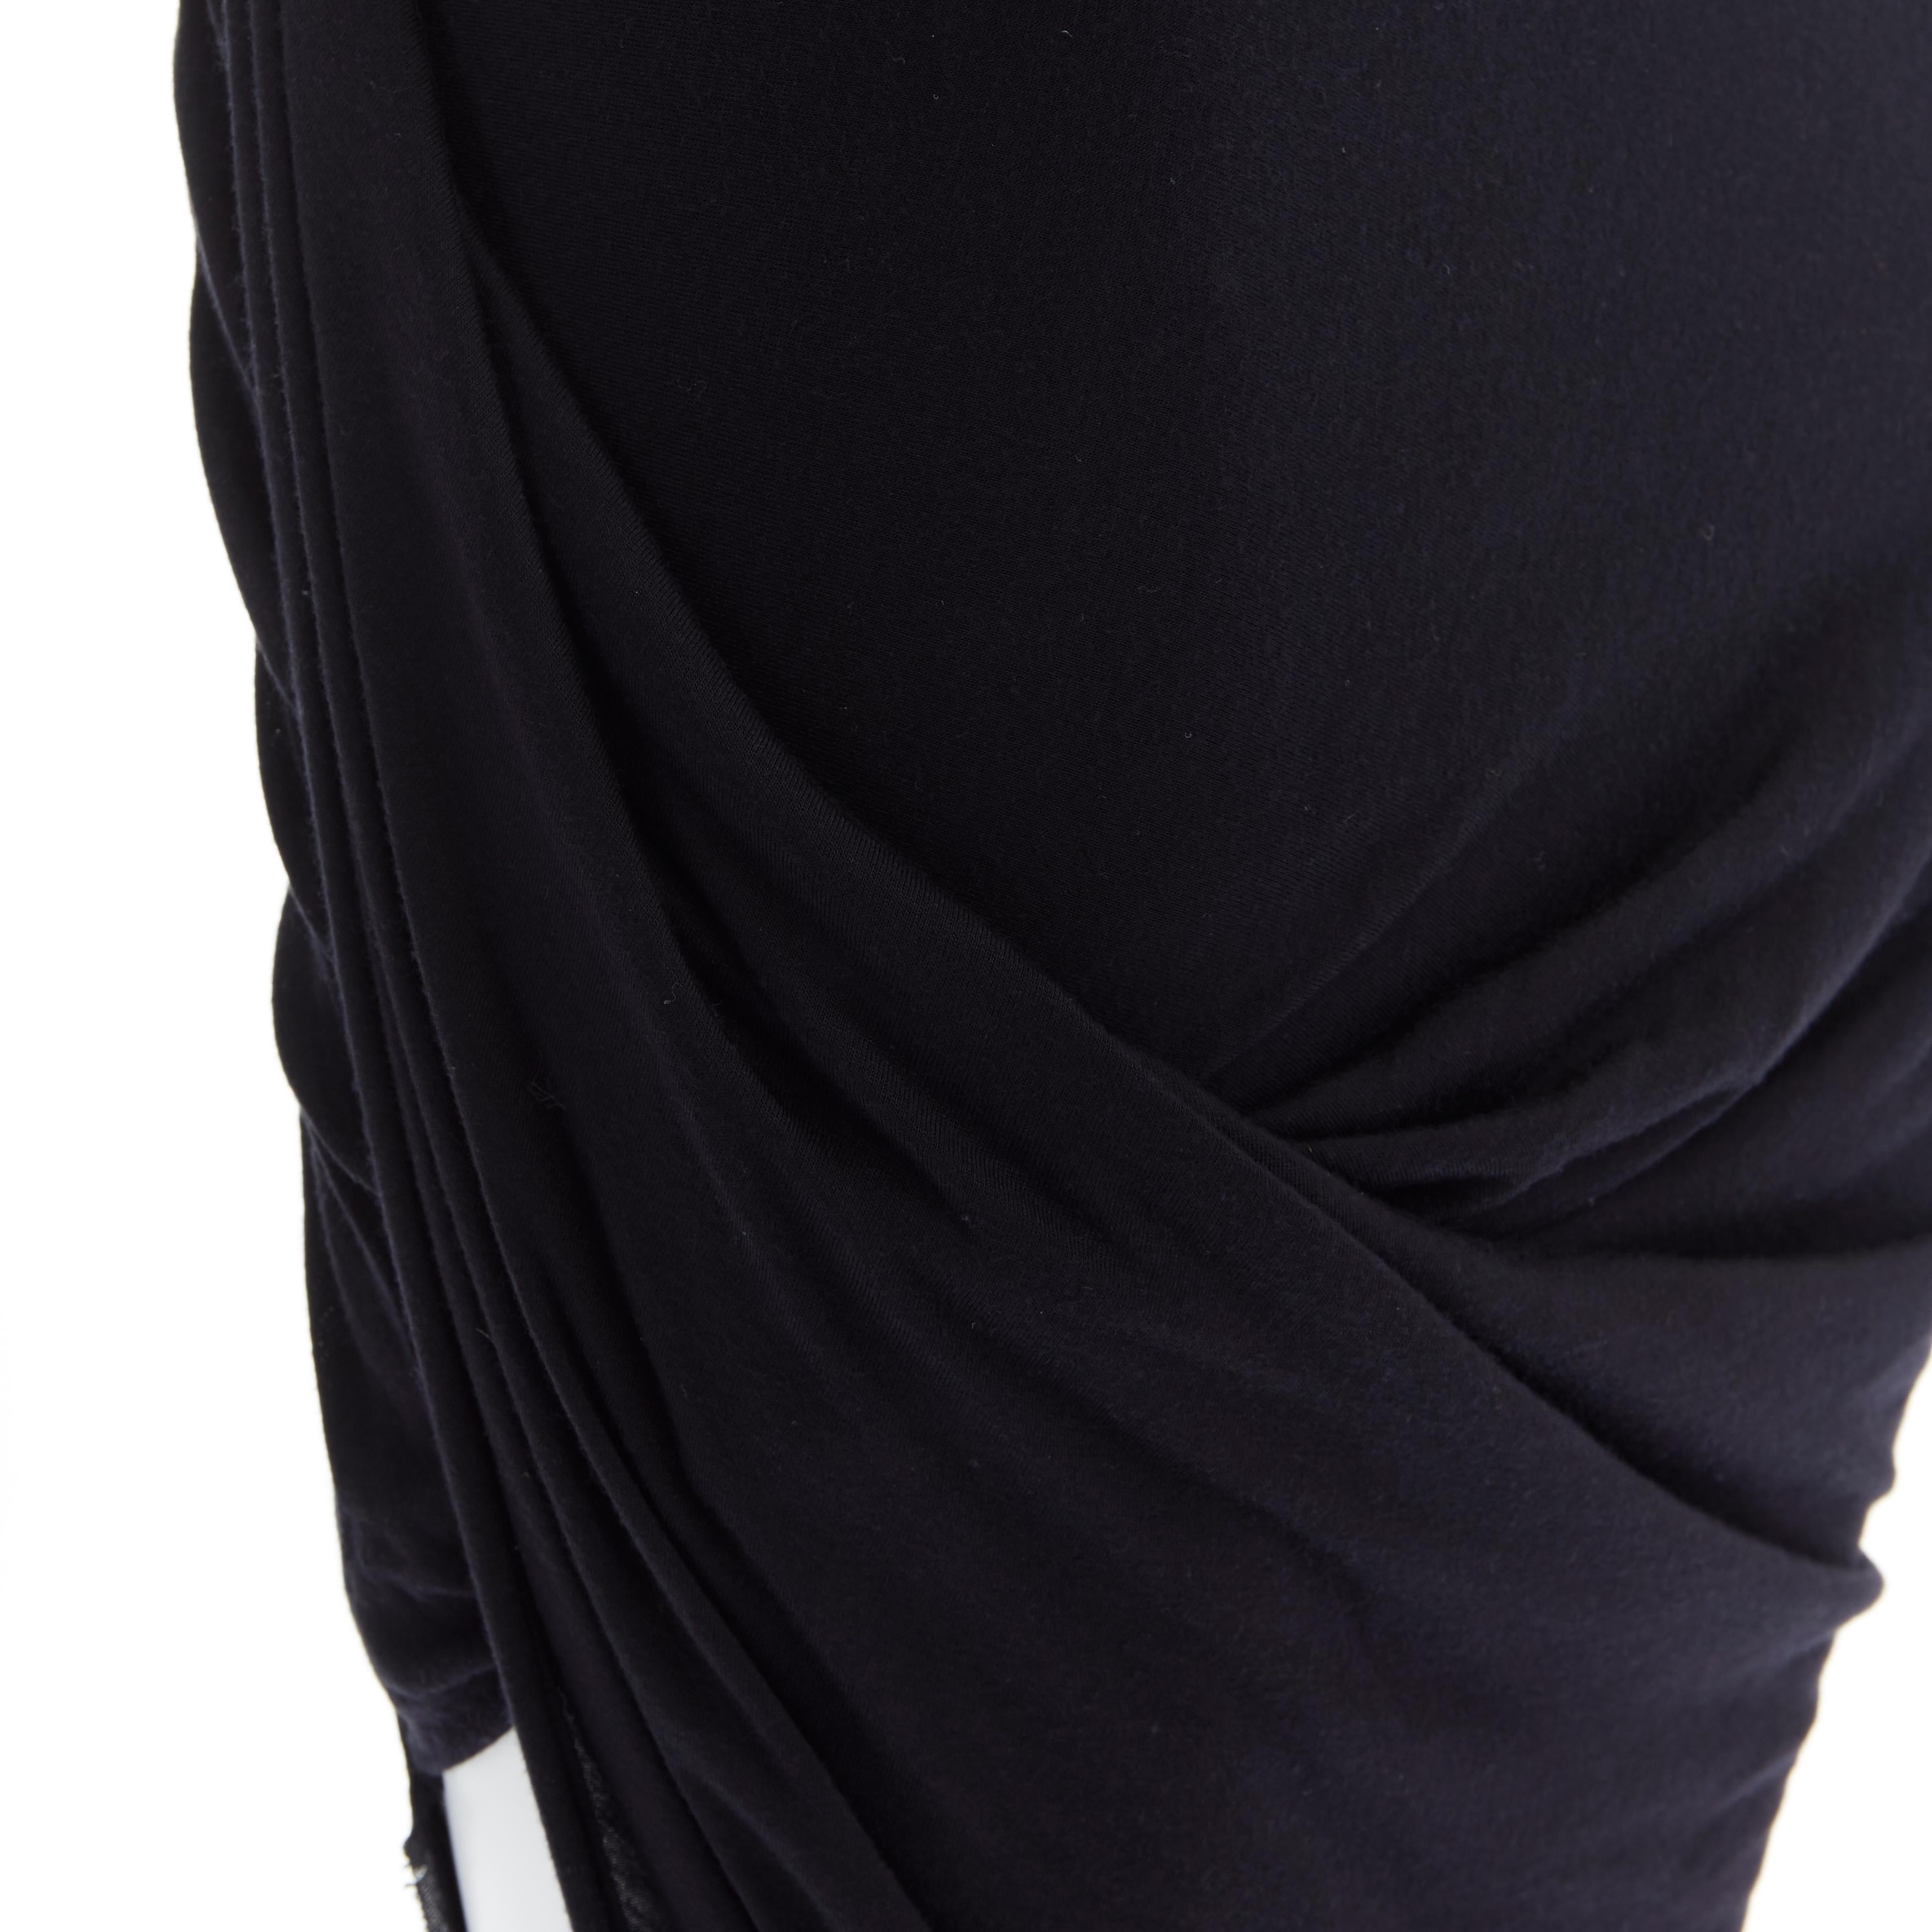 HELMUT HELMUT LANG black micro modal nylon draped open side casual skirt XS
Brand: Helmut Lang
Designer: Helmut Lang
Model Name / Style: Draped skirt
Material: Cotton
Color: Black
Pattern: Solid
Extra Detail: Asymmetric draped skirt.
Made in: